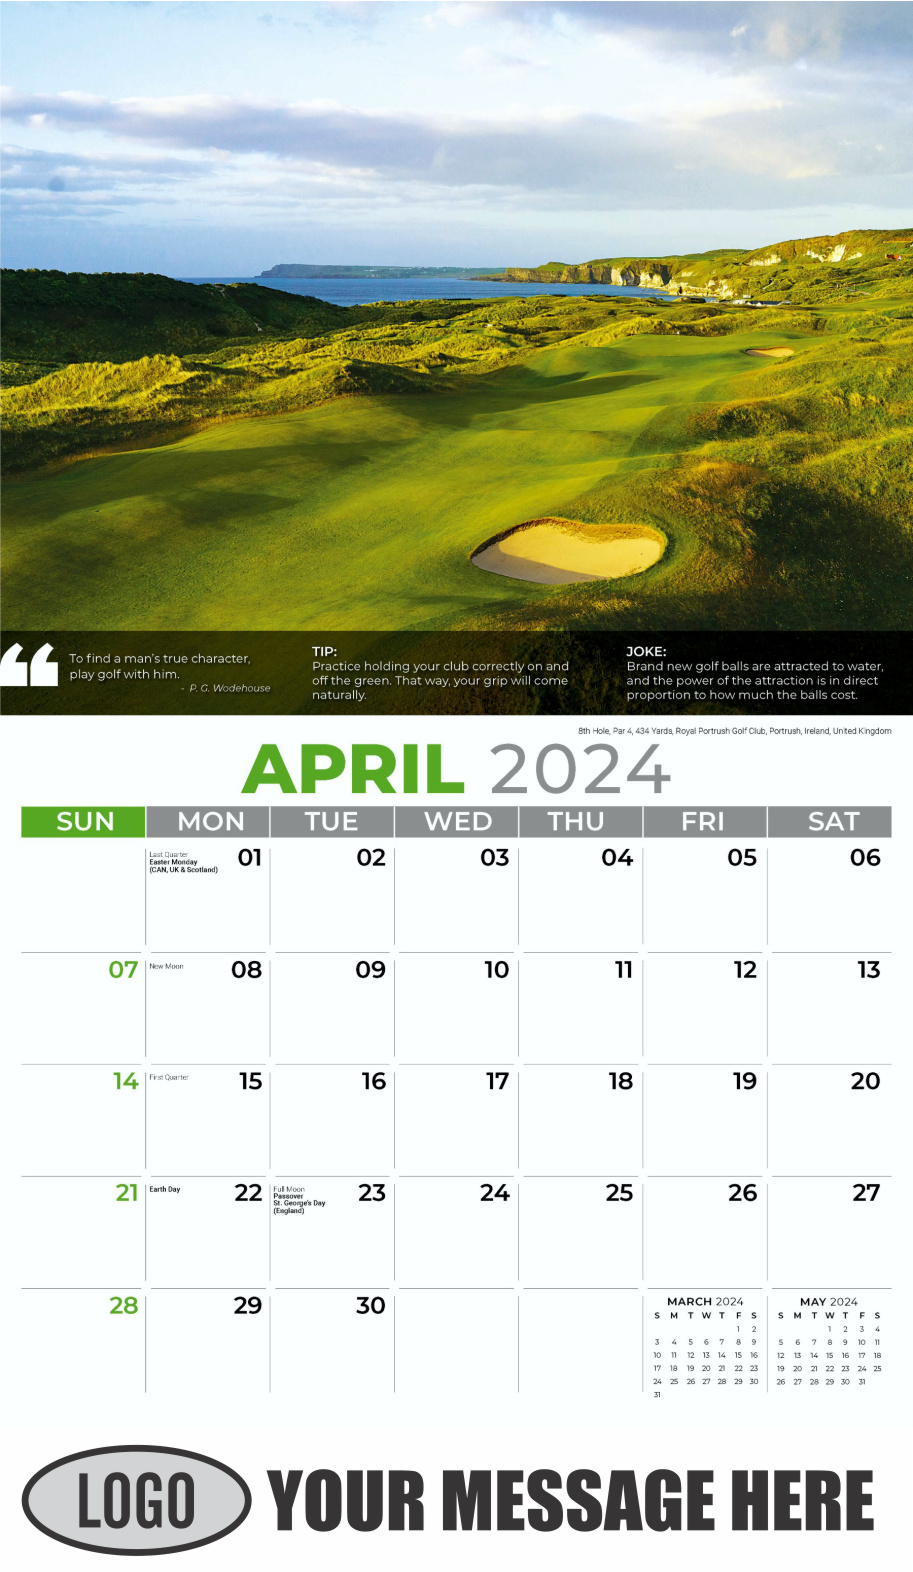 Golf Tips 2024 Business Promo Calendar - April